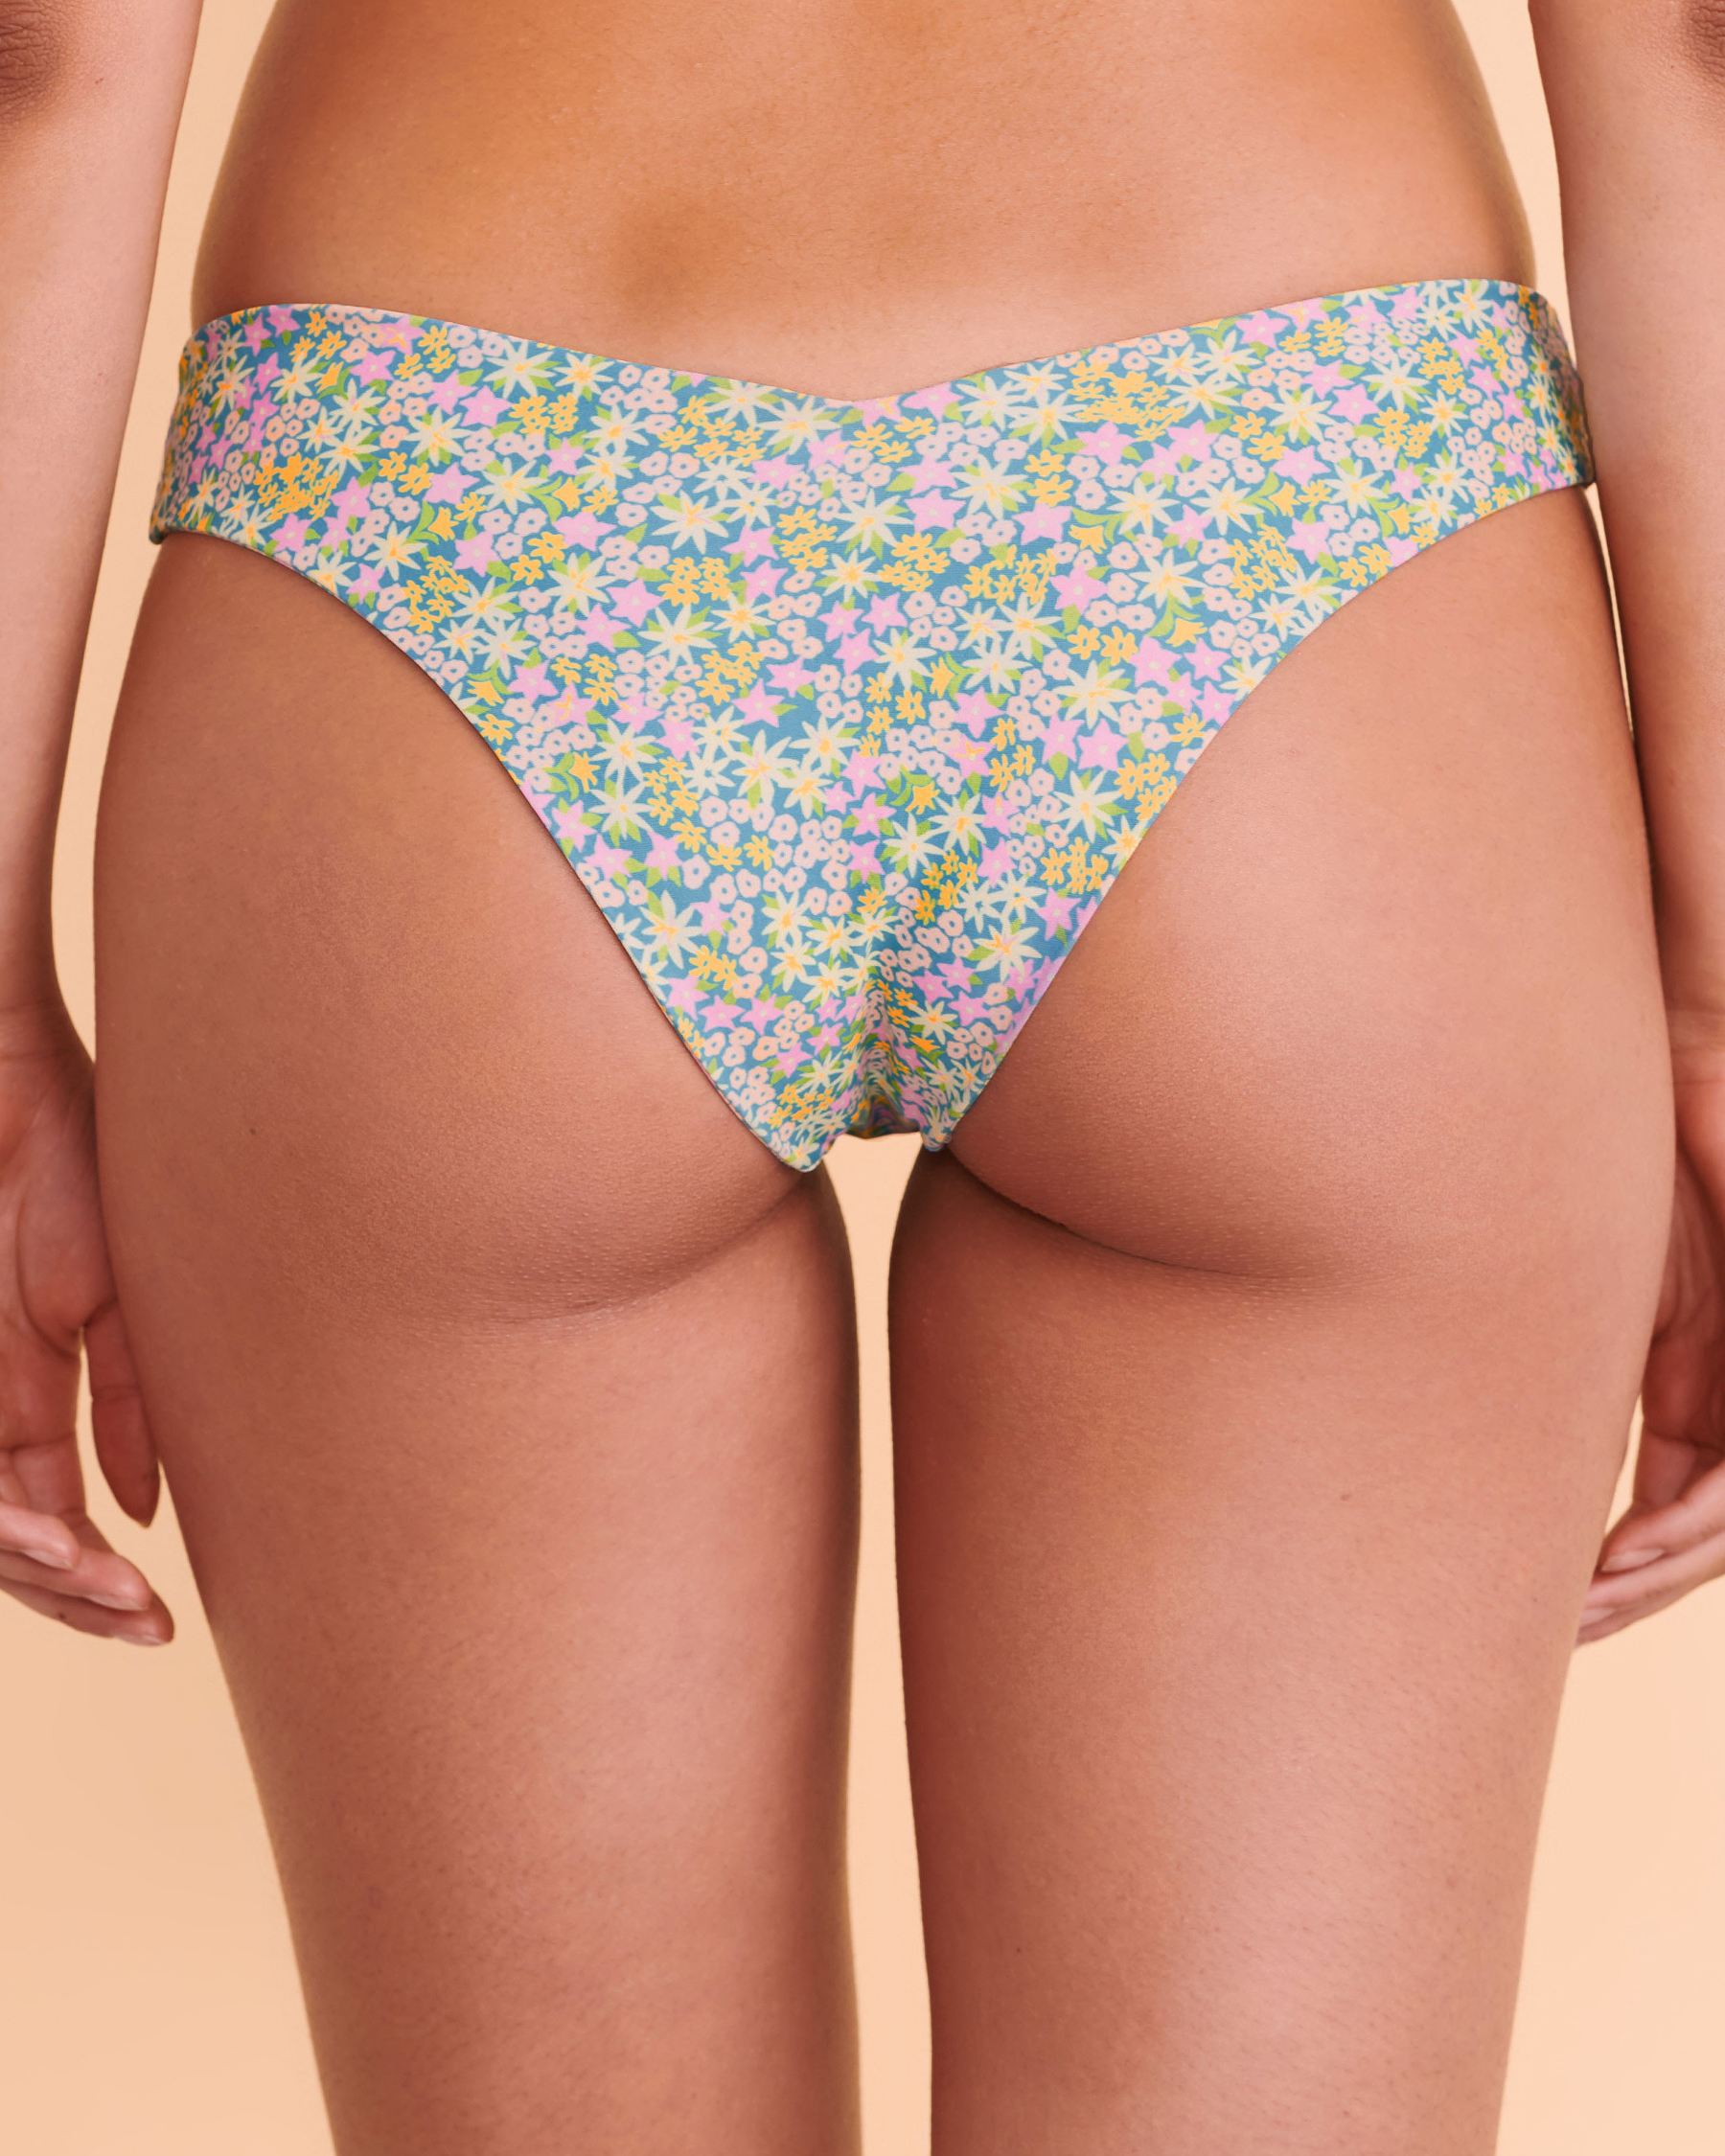 KULANI KINIS LAGUNA LOVERS Cheeky Bikini Bottom Ditsy print BOT216LAGL - View3